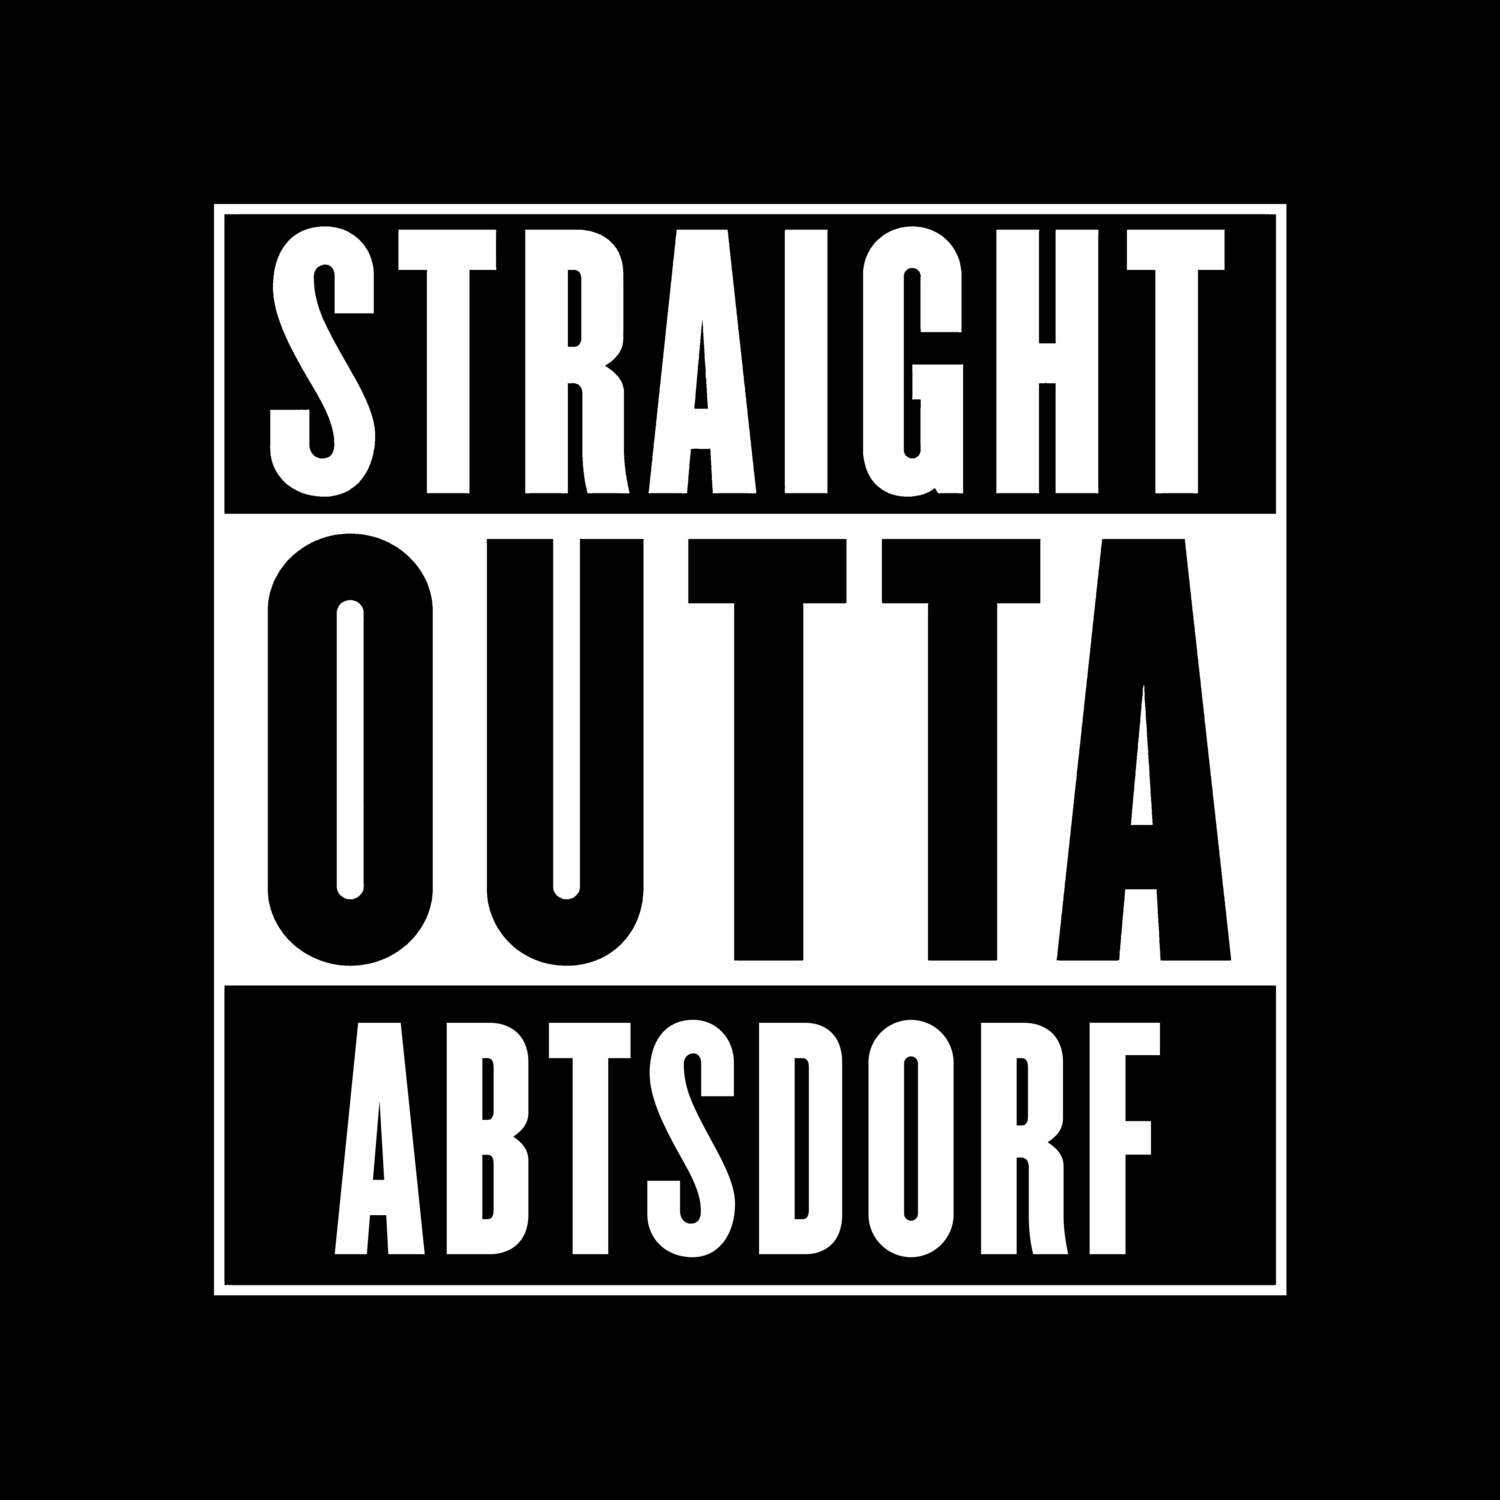 Abtsdorf T-Shirt »Straight Outta«